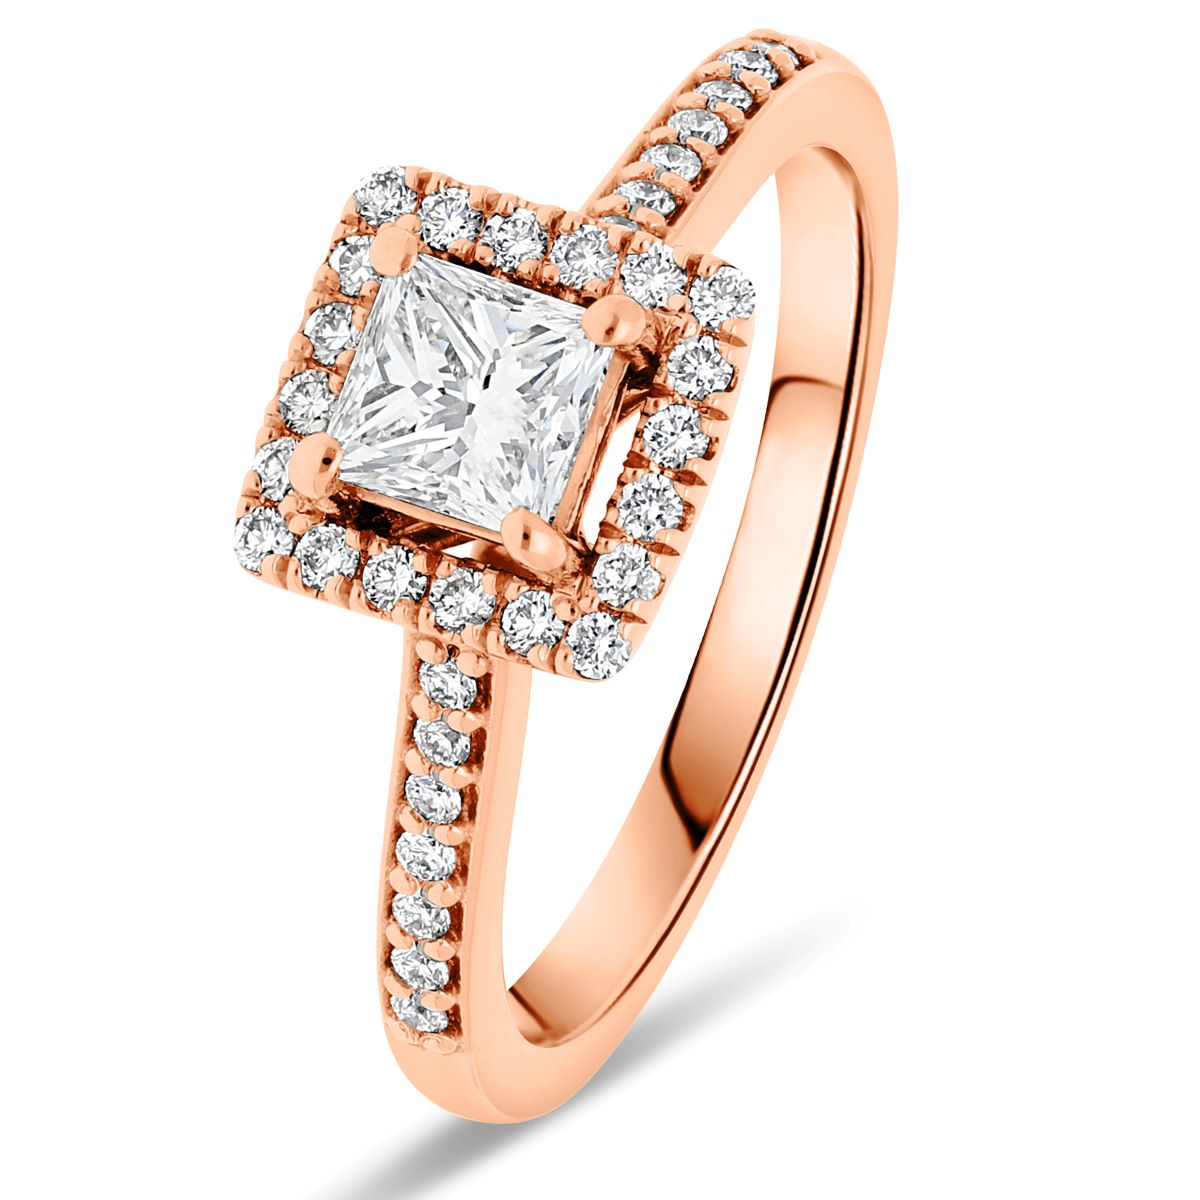 capri-r-solitaires-diamants-certifies-accompagne-or-rose-750-